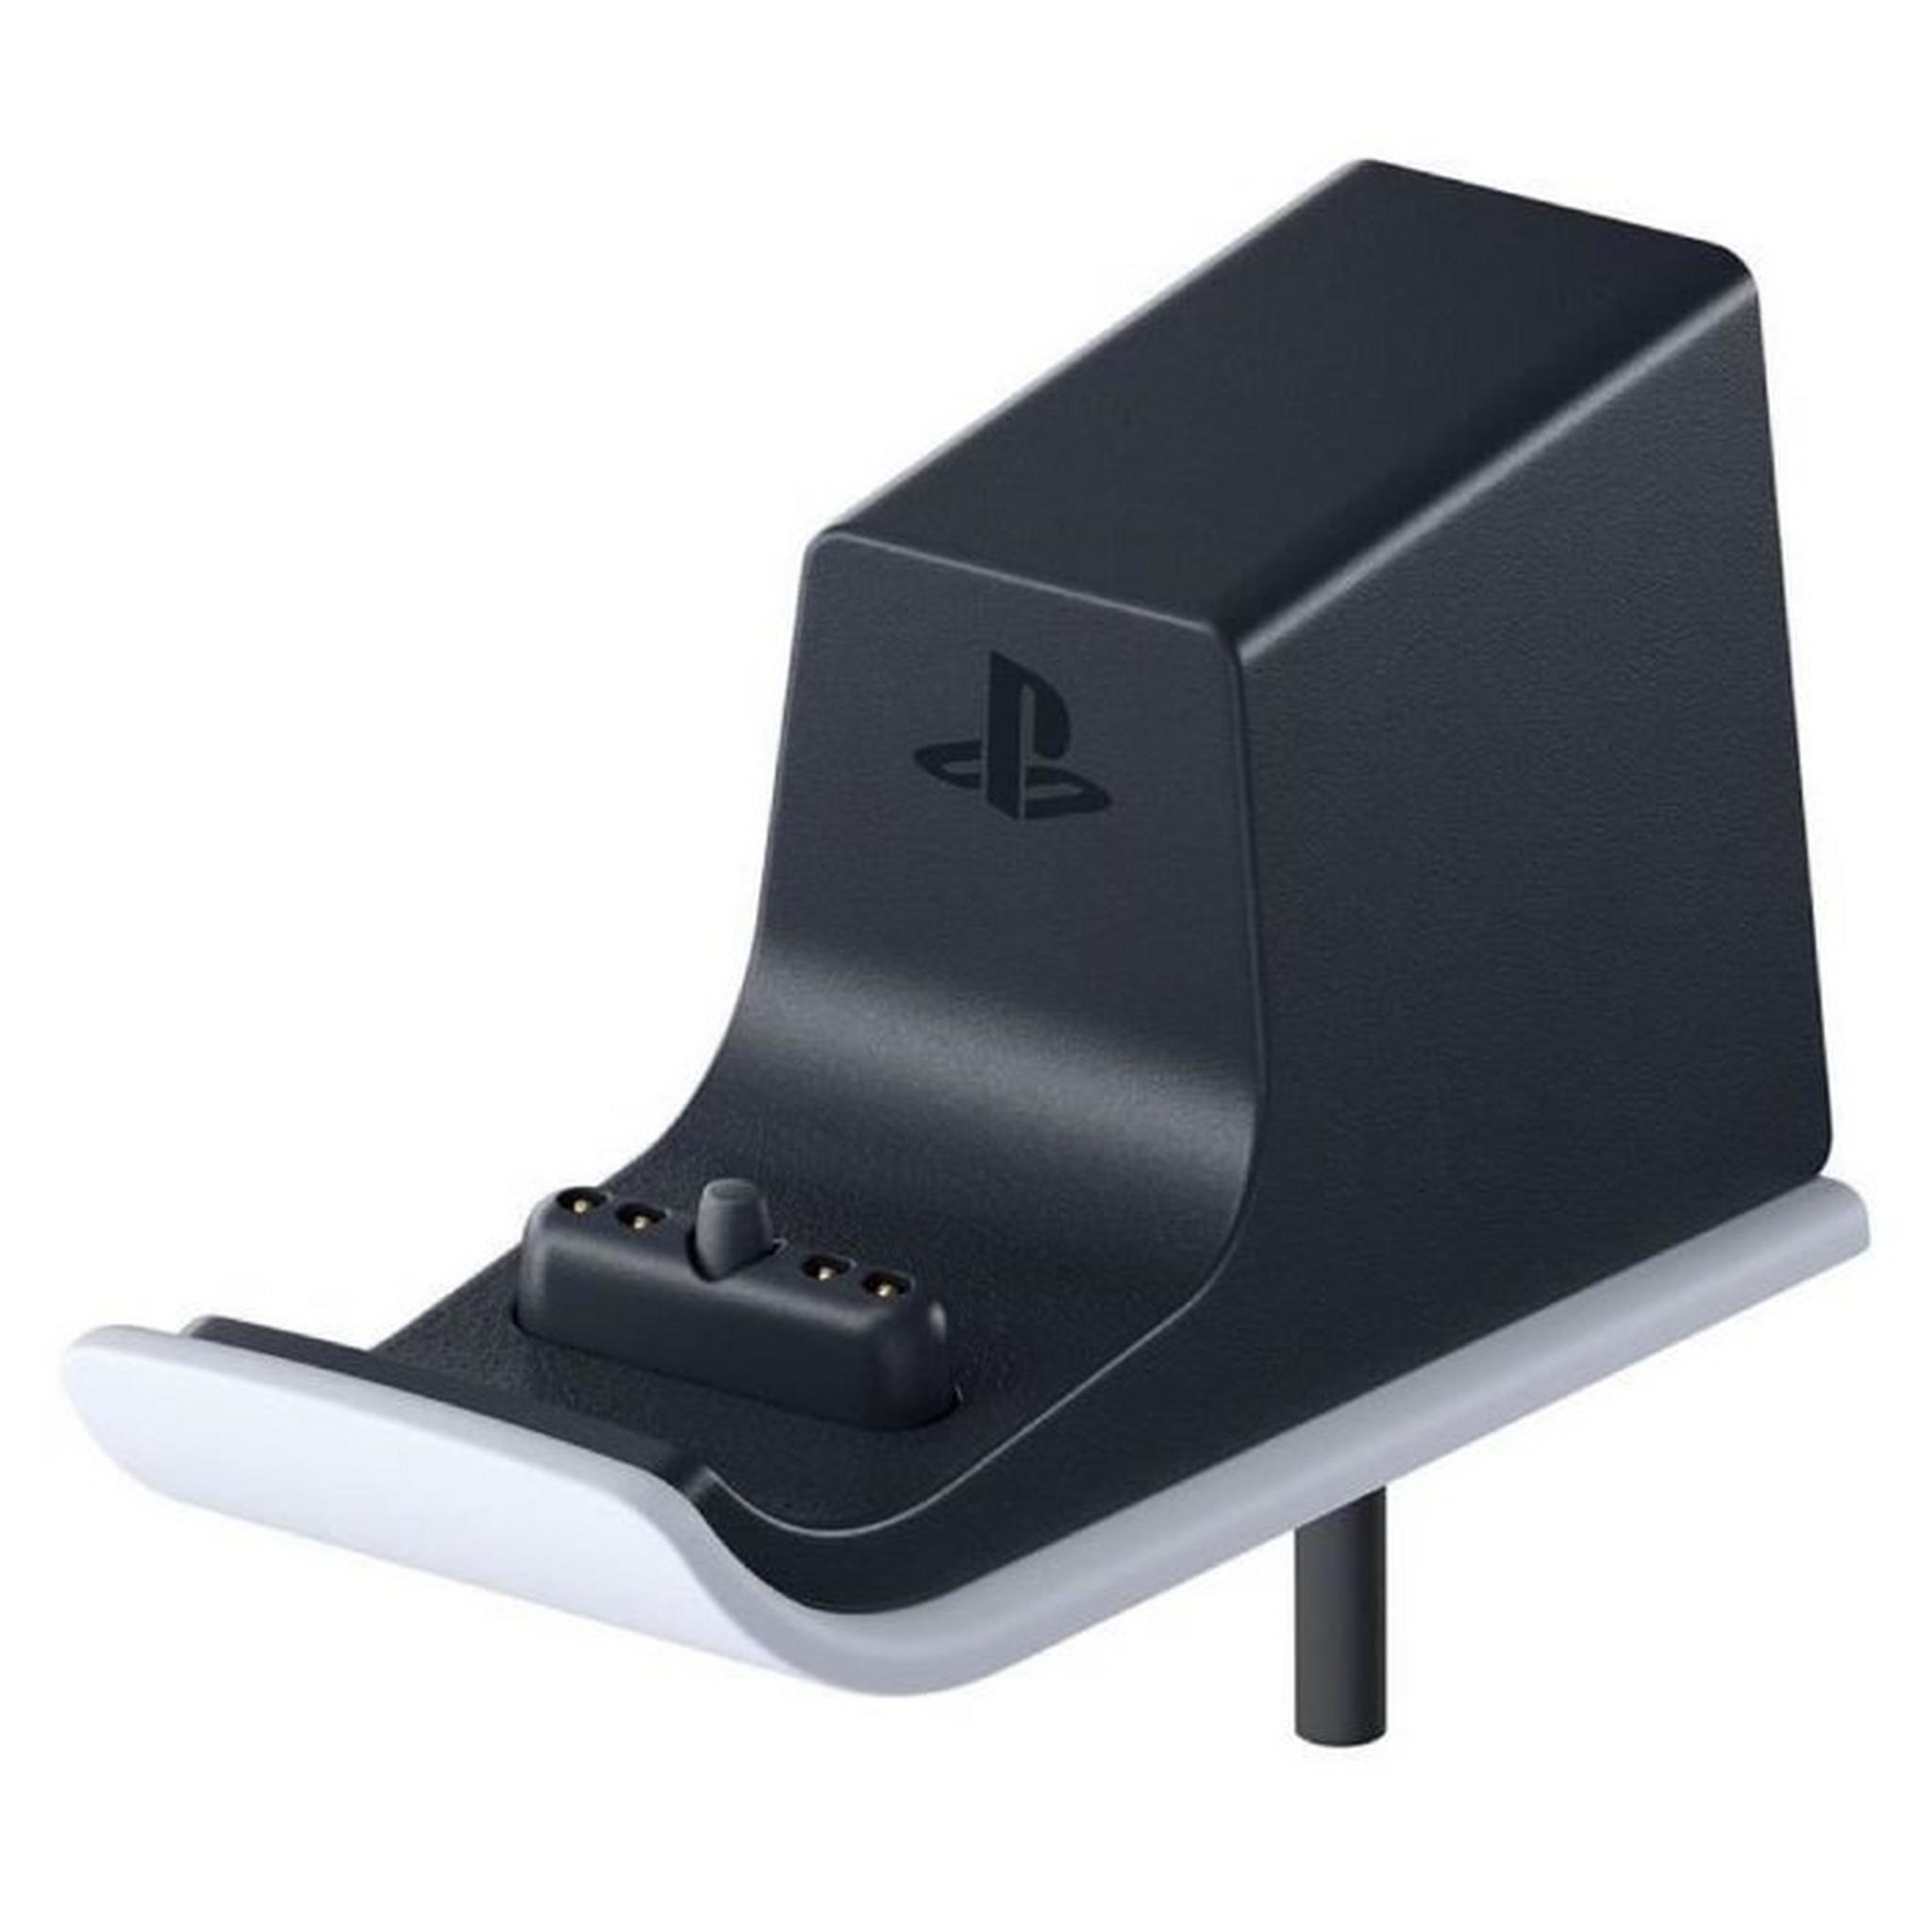 Sony Playstation 5 Pulse Elite Wireless Headset – Black/White